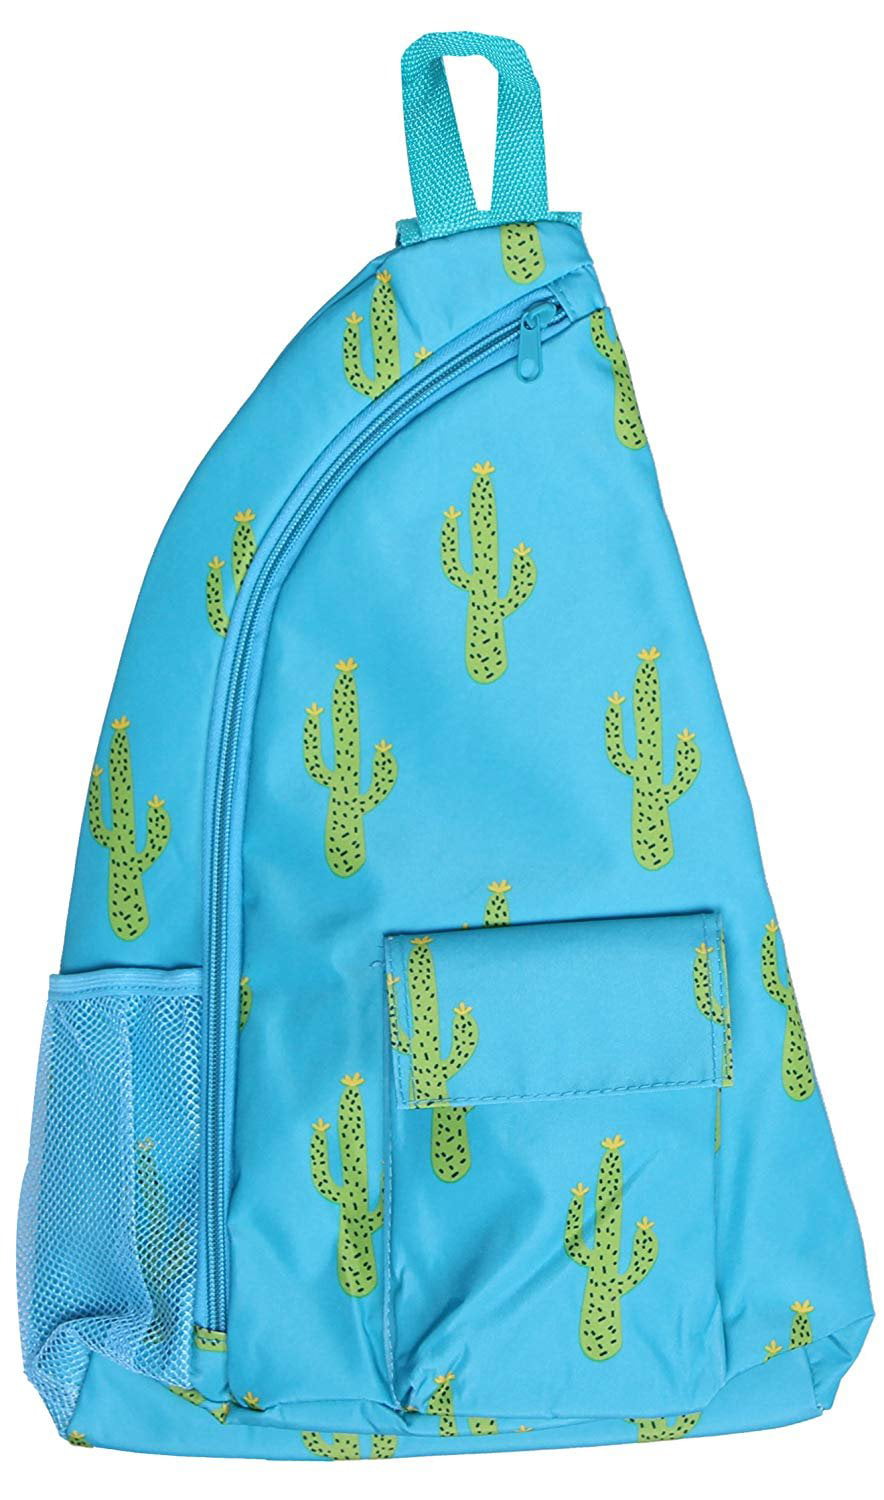 Riapawel Canvas Bag Strap Replacement Adjustable Shoulder Strap For  Messenger, Laptop, Camera, Travel Bags